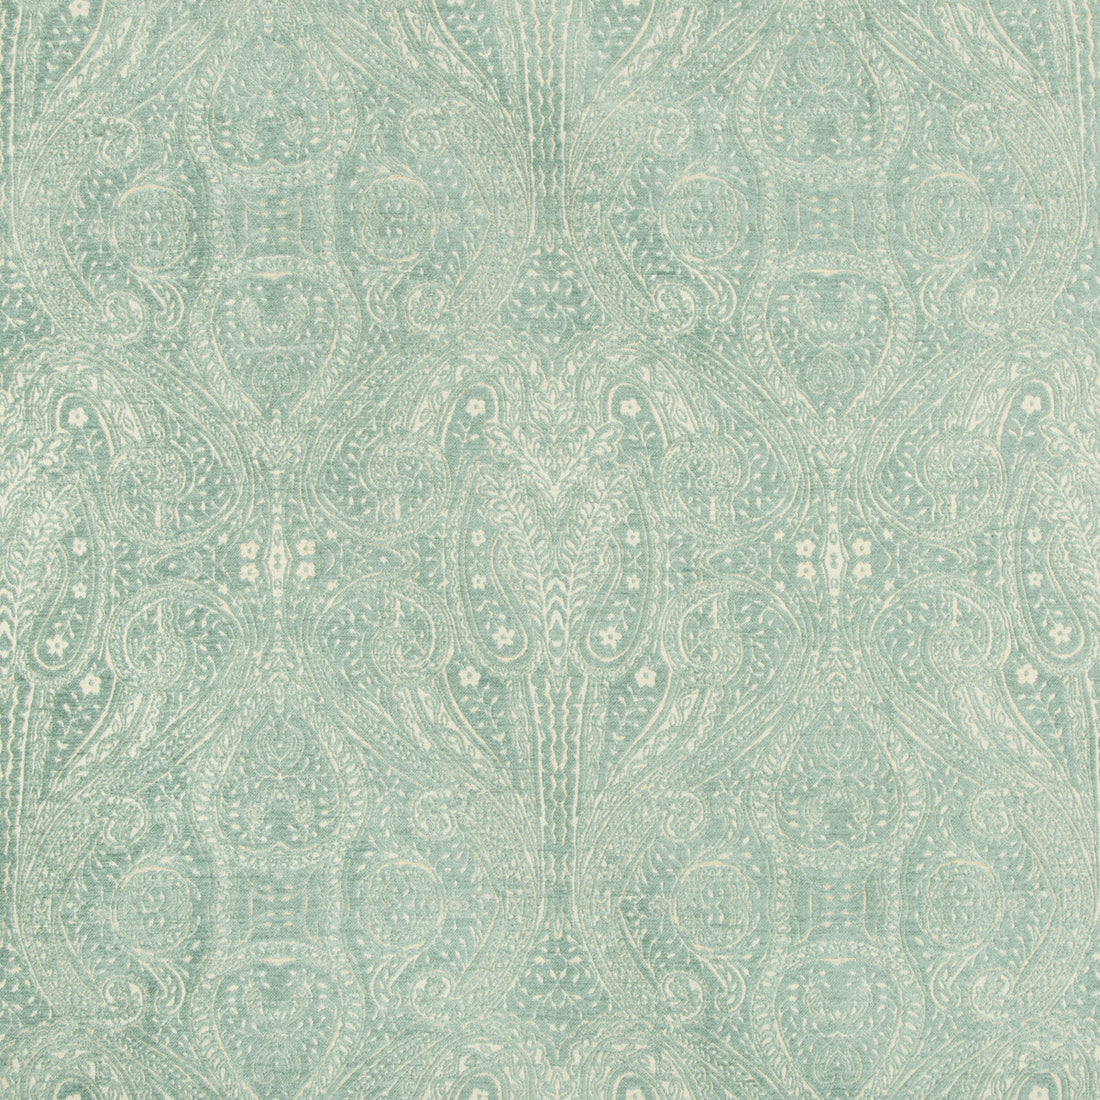 Kravet Design fabric in 34720-113 color - pattern 34720.113.0 - by Kravet Design in the Gis collection